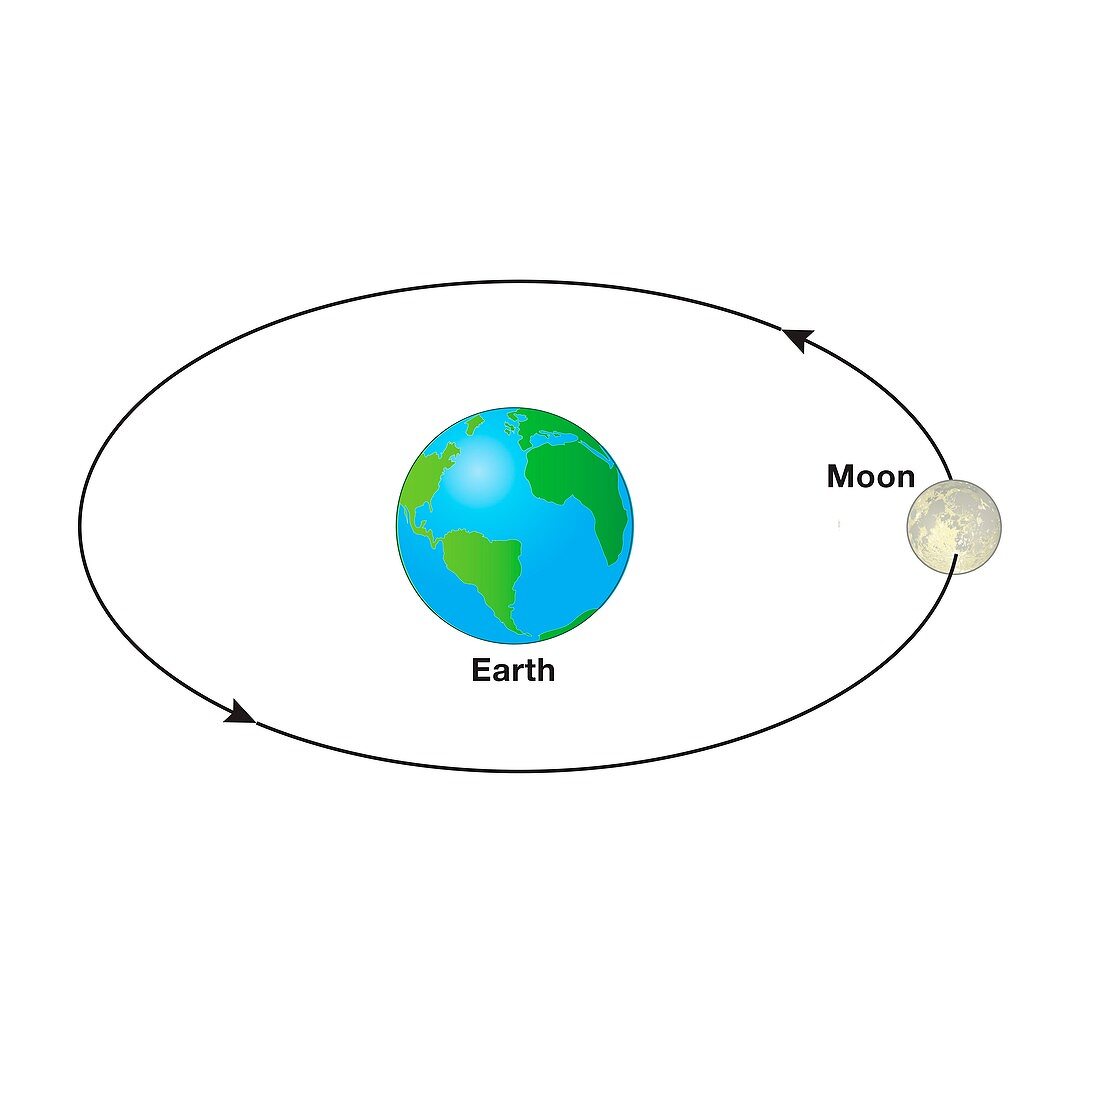 The Moon orbiting Earth, illustration